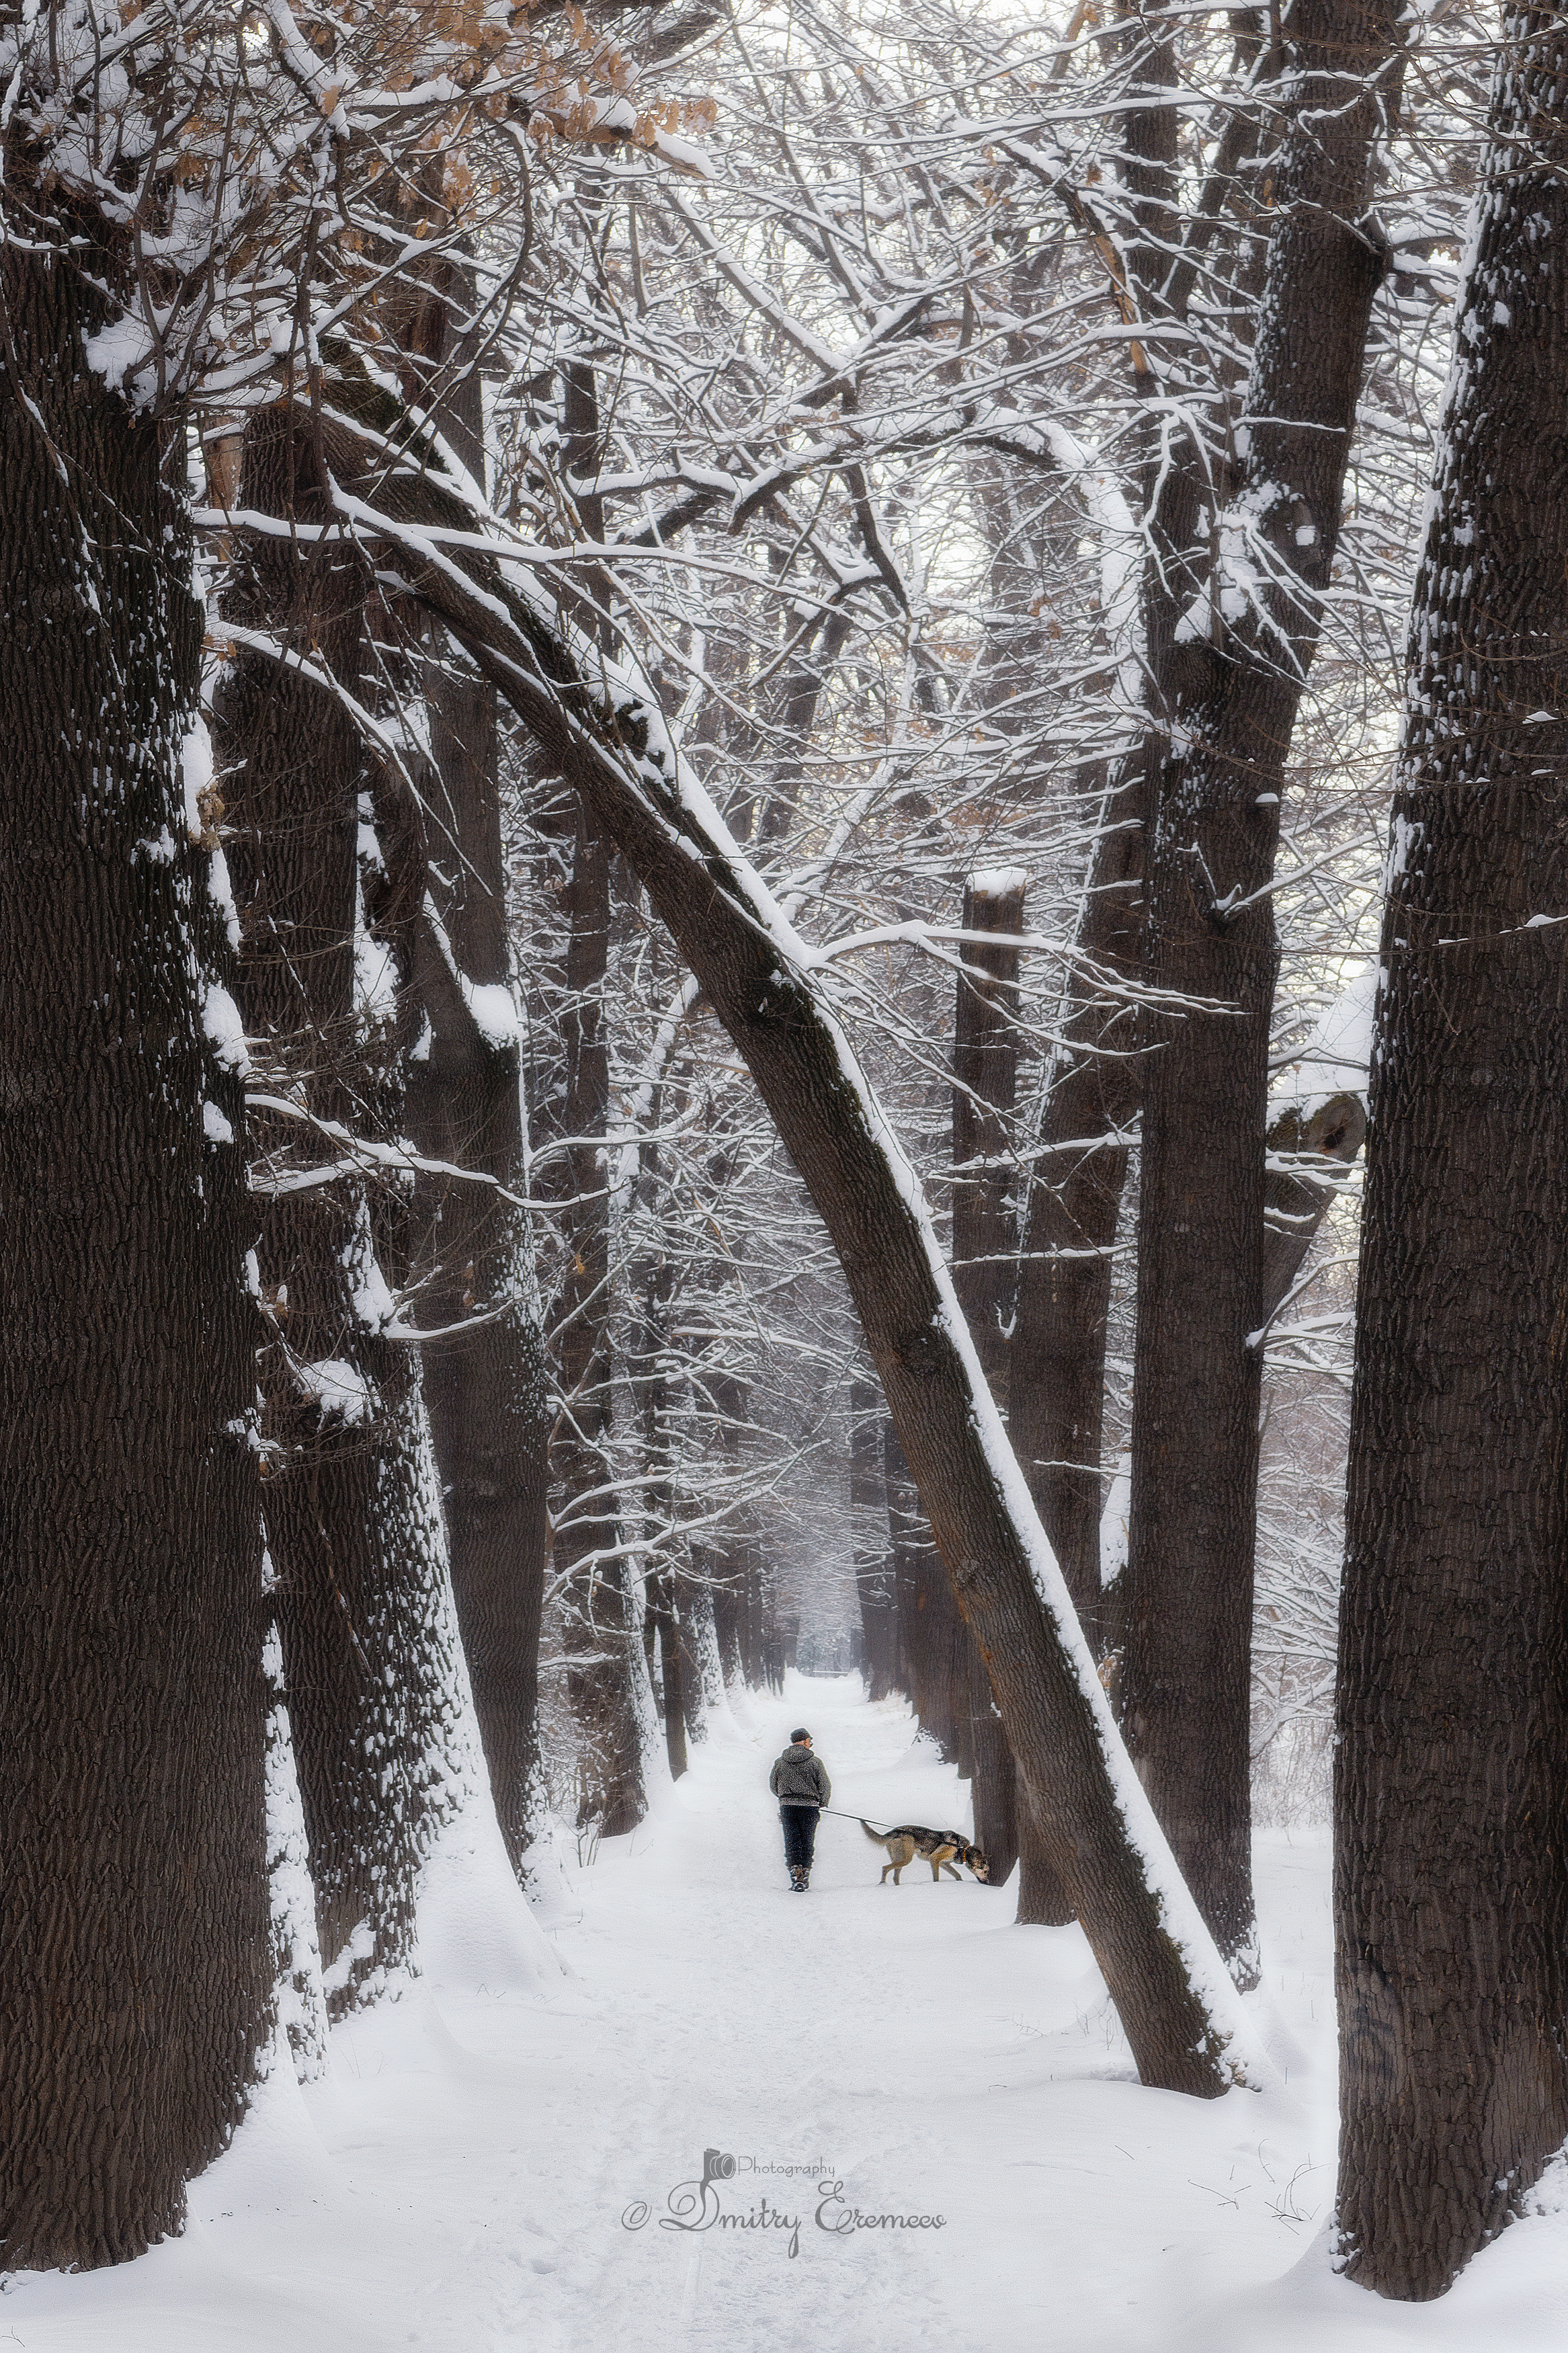 зима человек собака прогулка роща деревья дуб снег природа пейзаж фотография canon, Еремеев Дмитрий